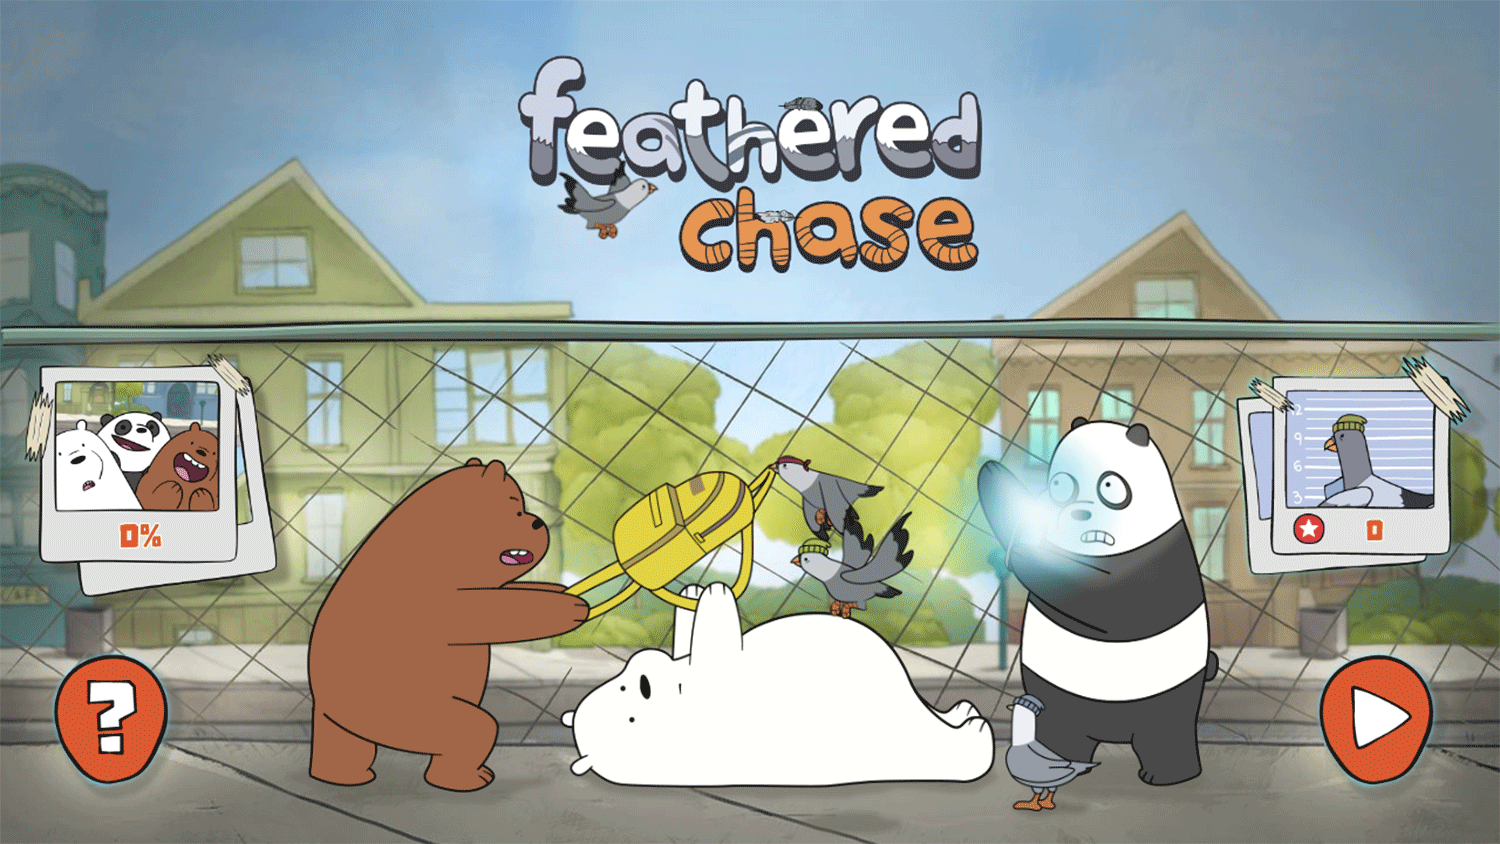 We Bare Bears Feathered Chase Welcome Screen Screenshot.